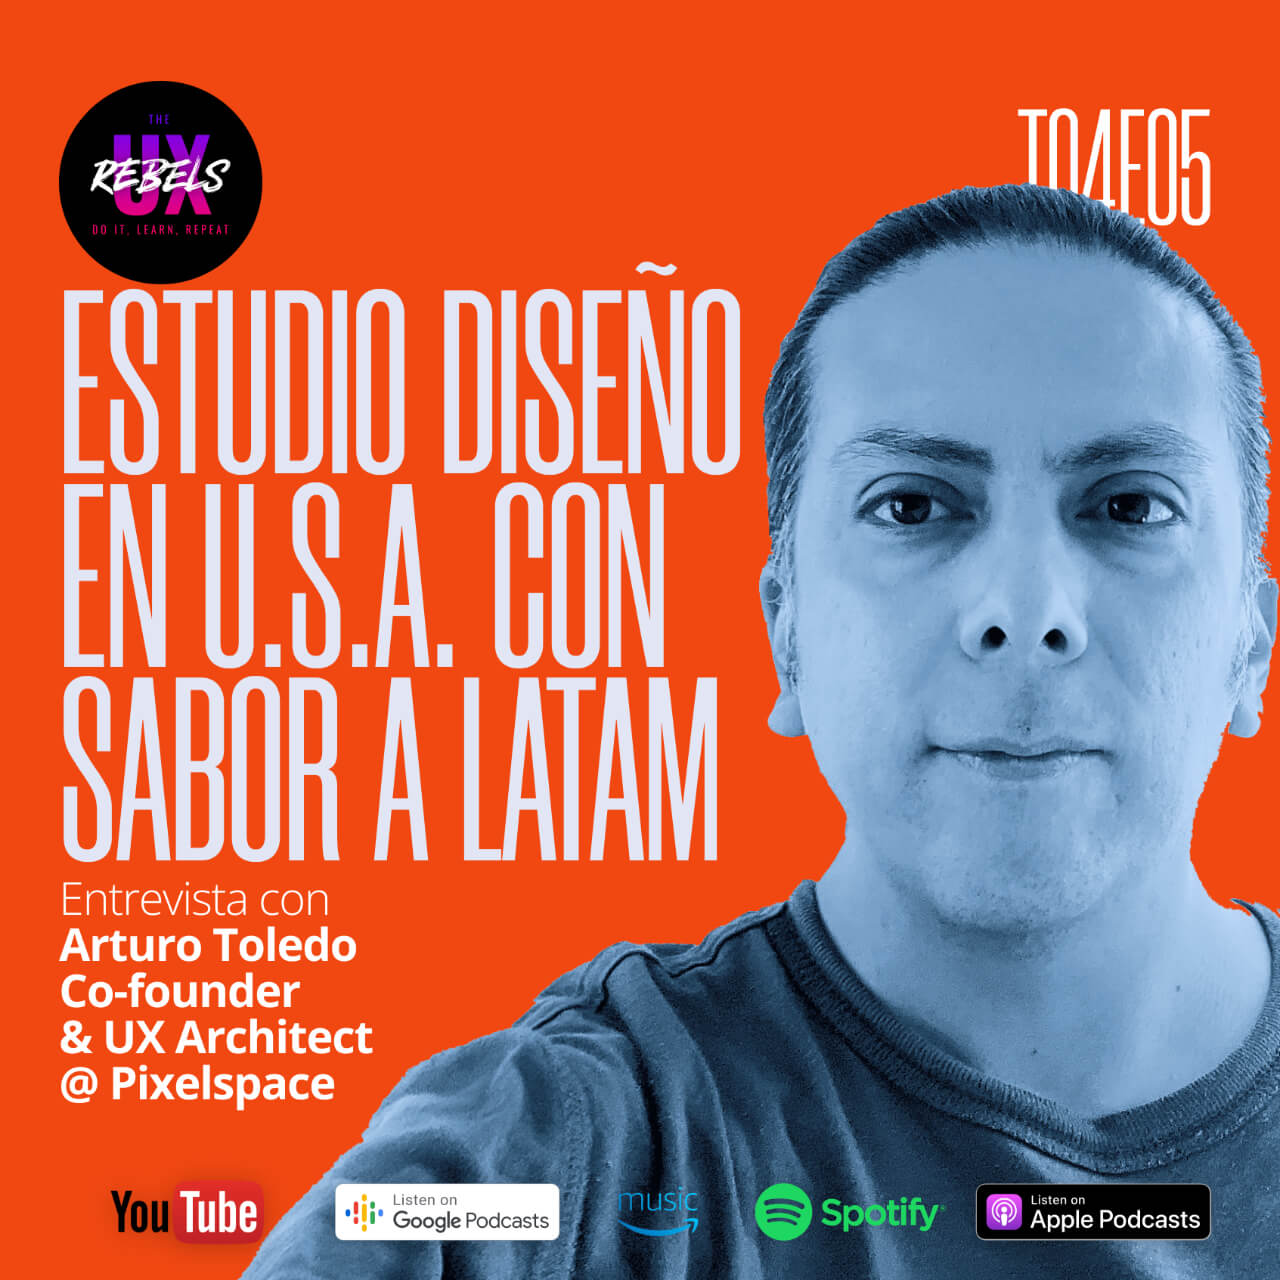 Escucha el episodio con Arturo Toledo